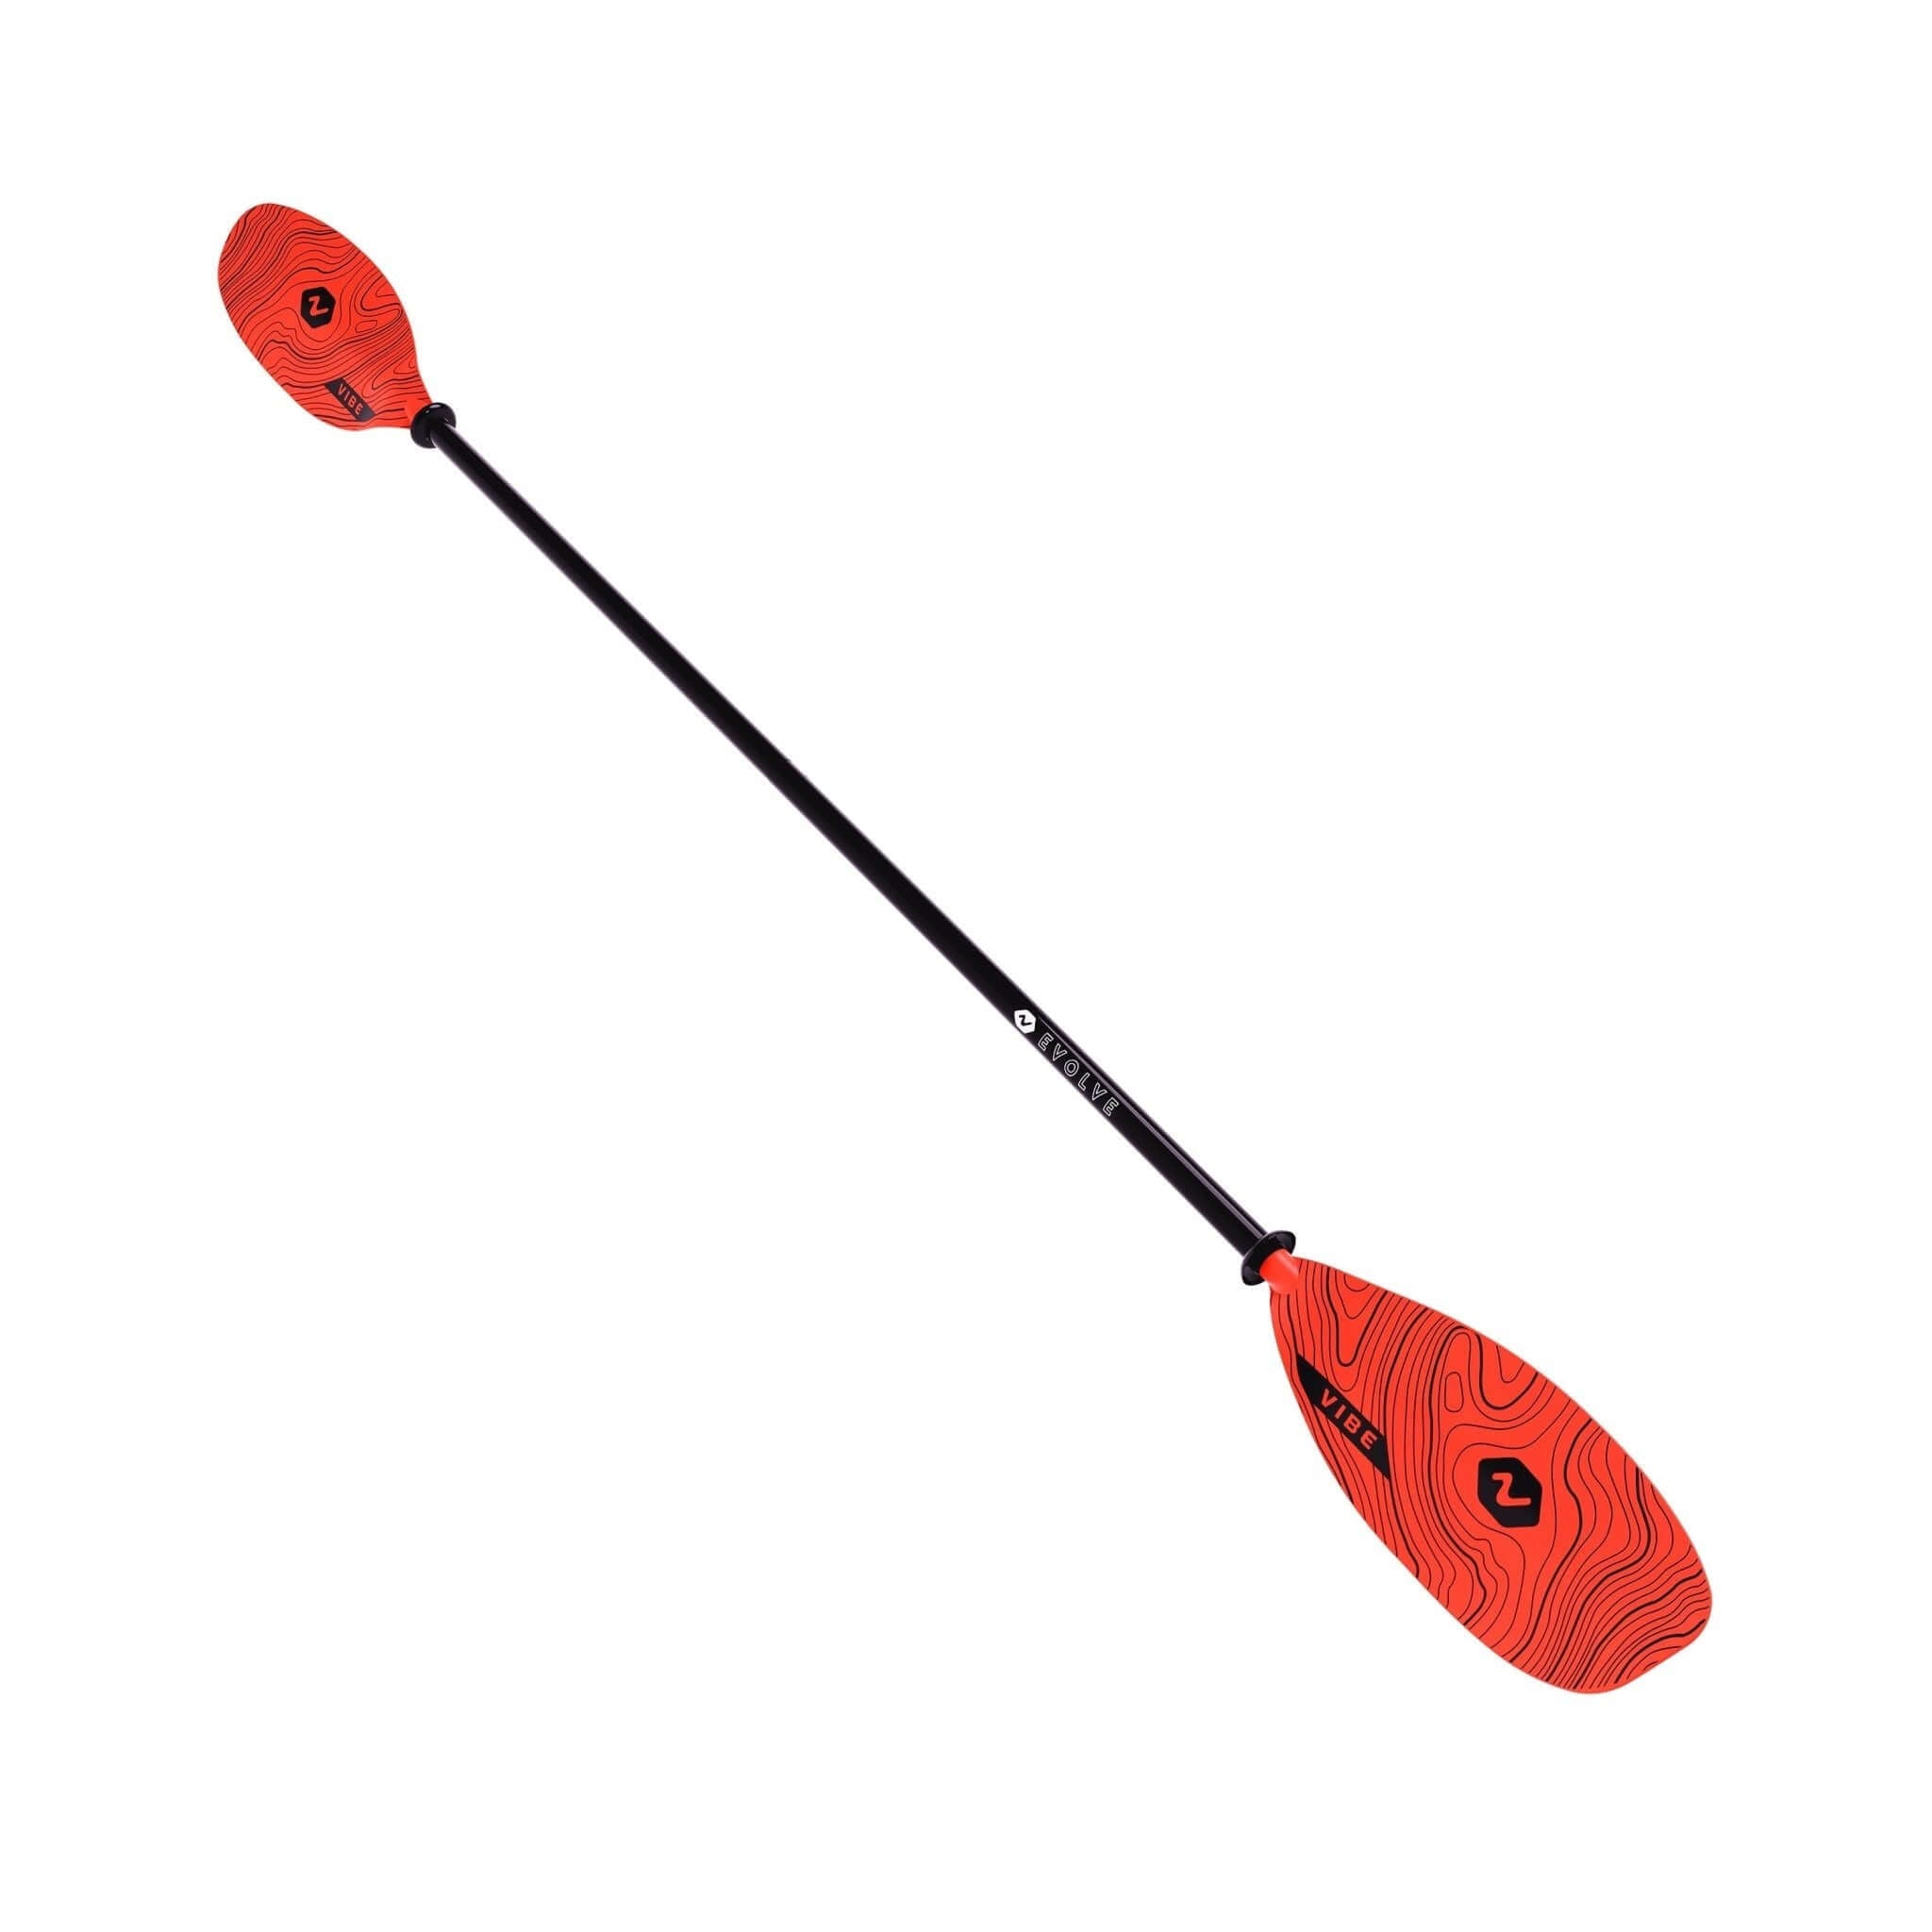 Vibe Evolve 230-250 Centimeter Adjustable Fiberglass Paddle